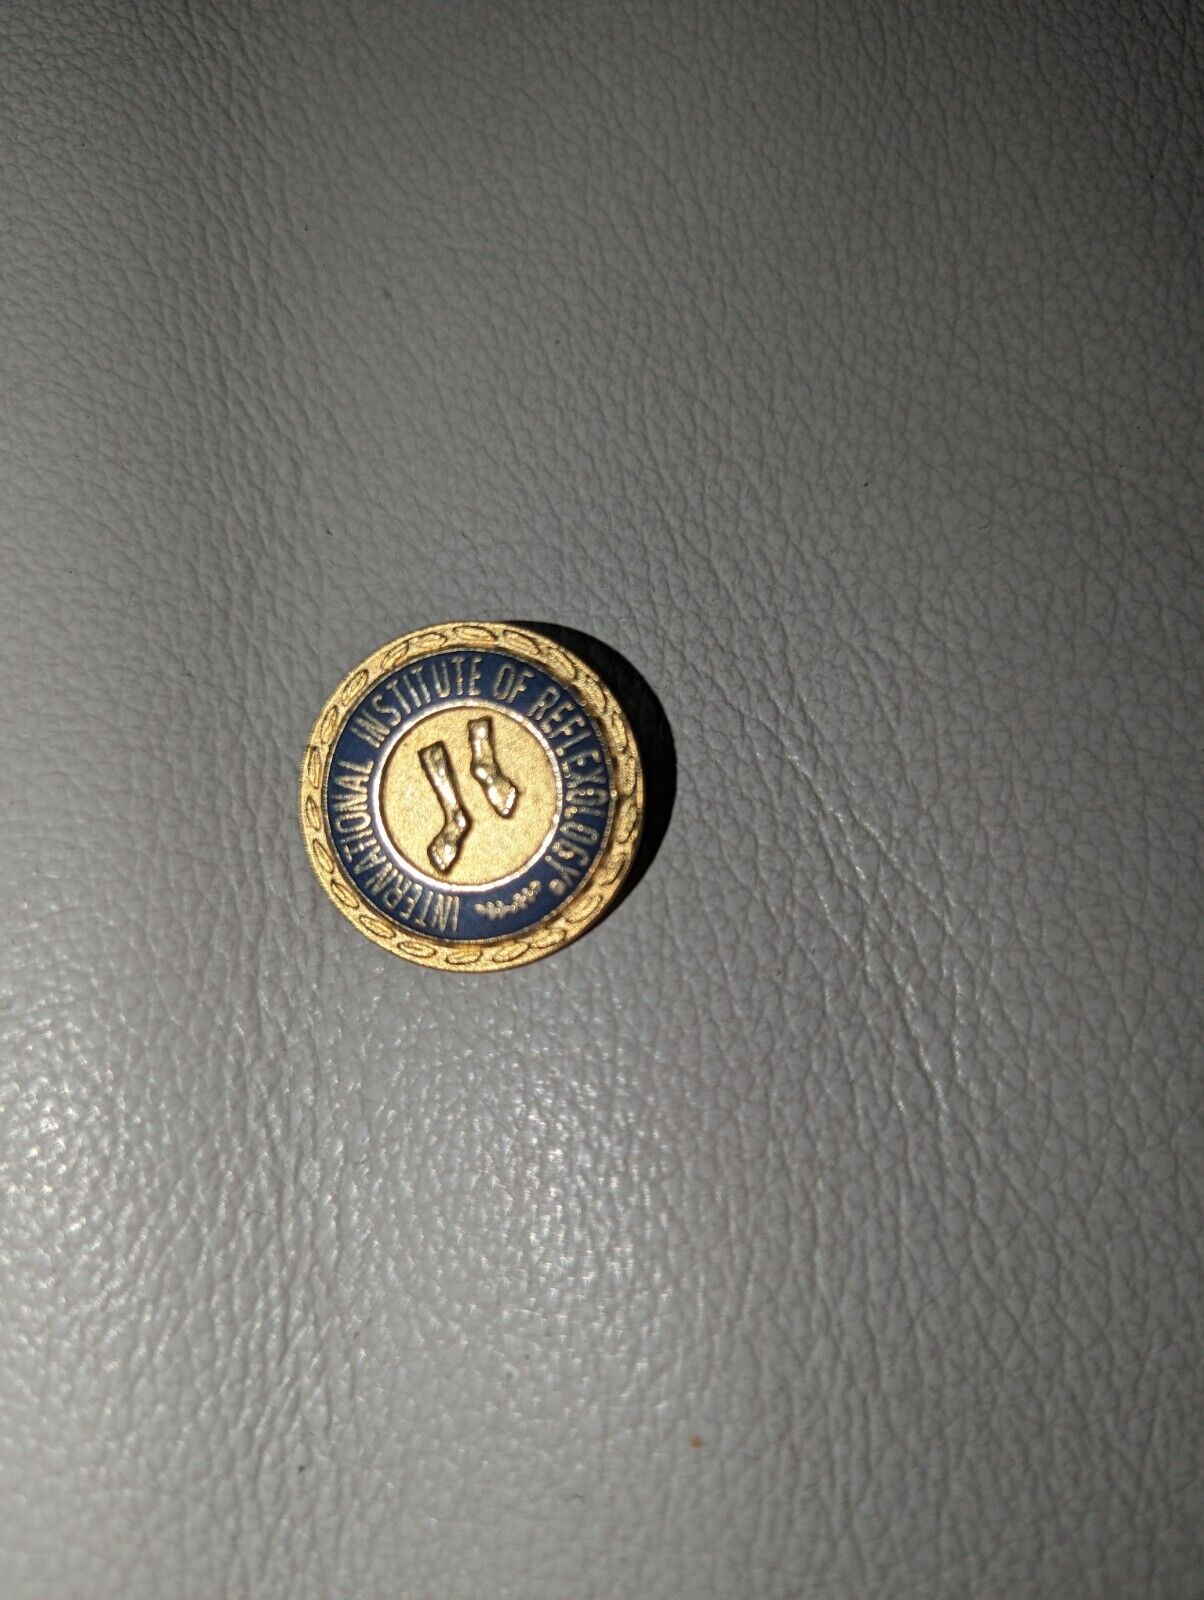 INTERNATIONAL INSTITUTE OF REFLEXOLOGY Vintage Lapel Pin